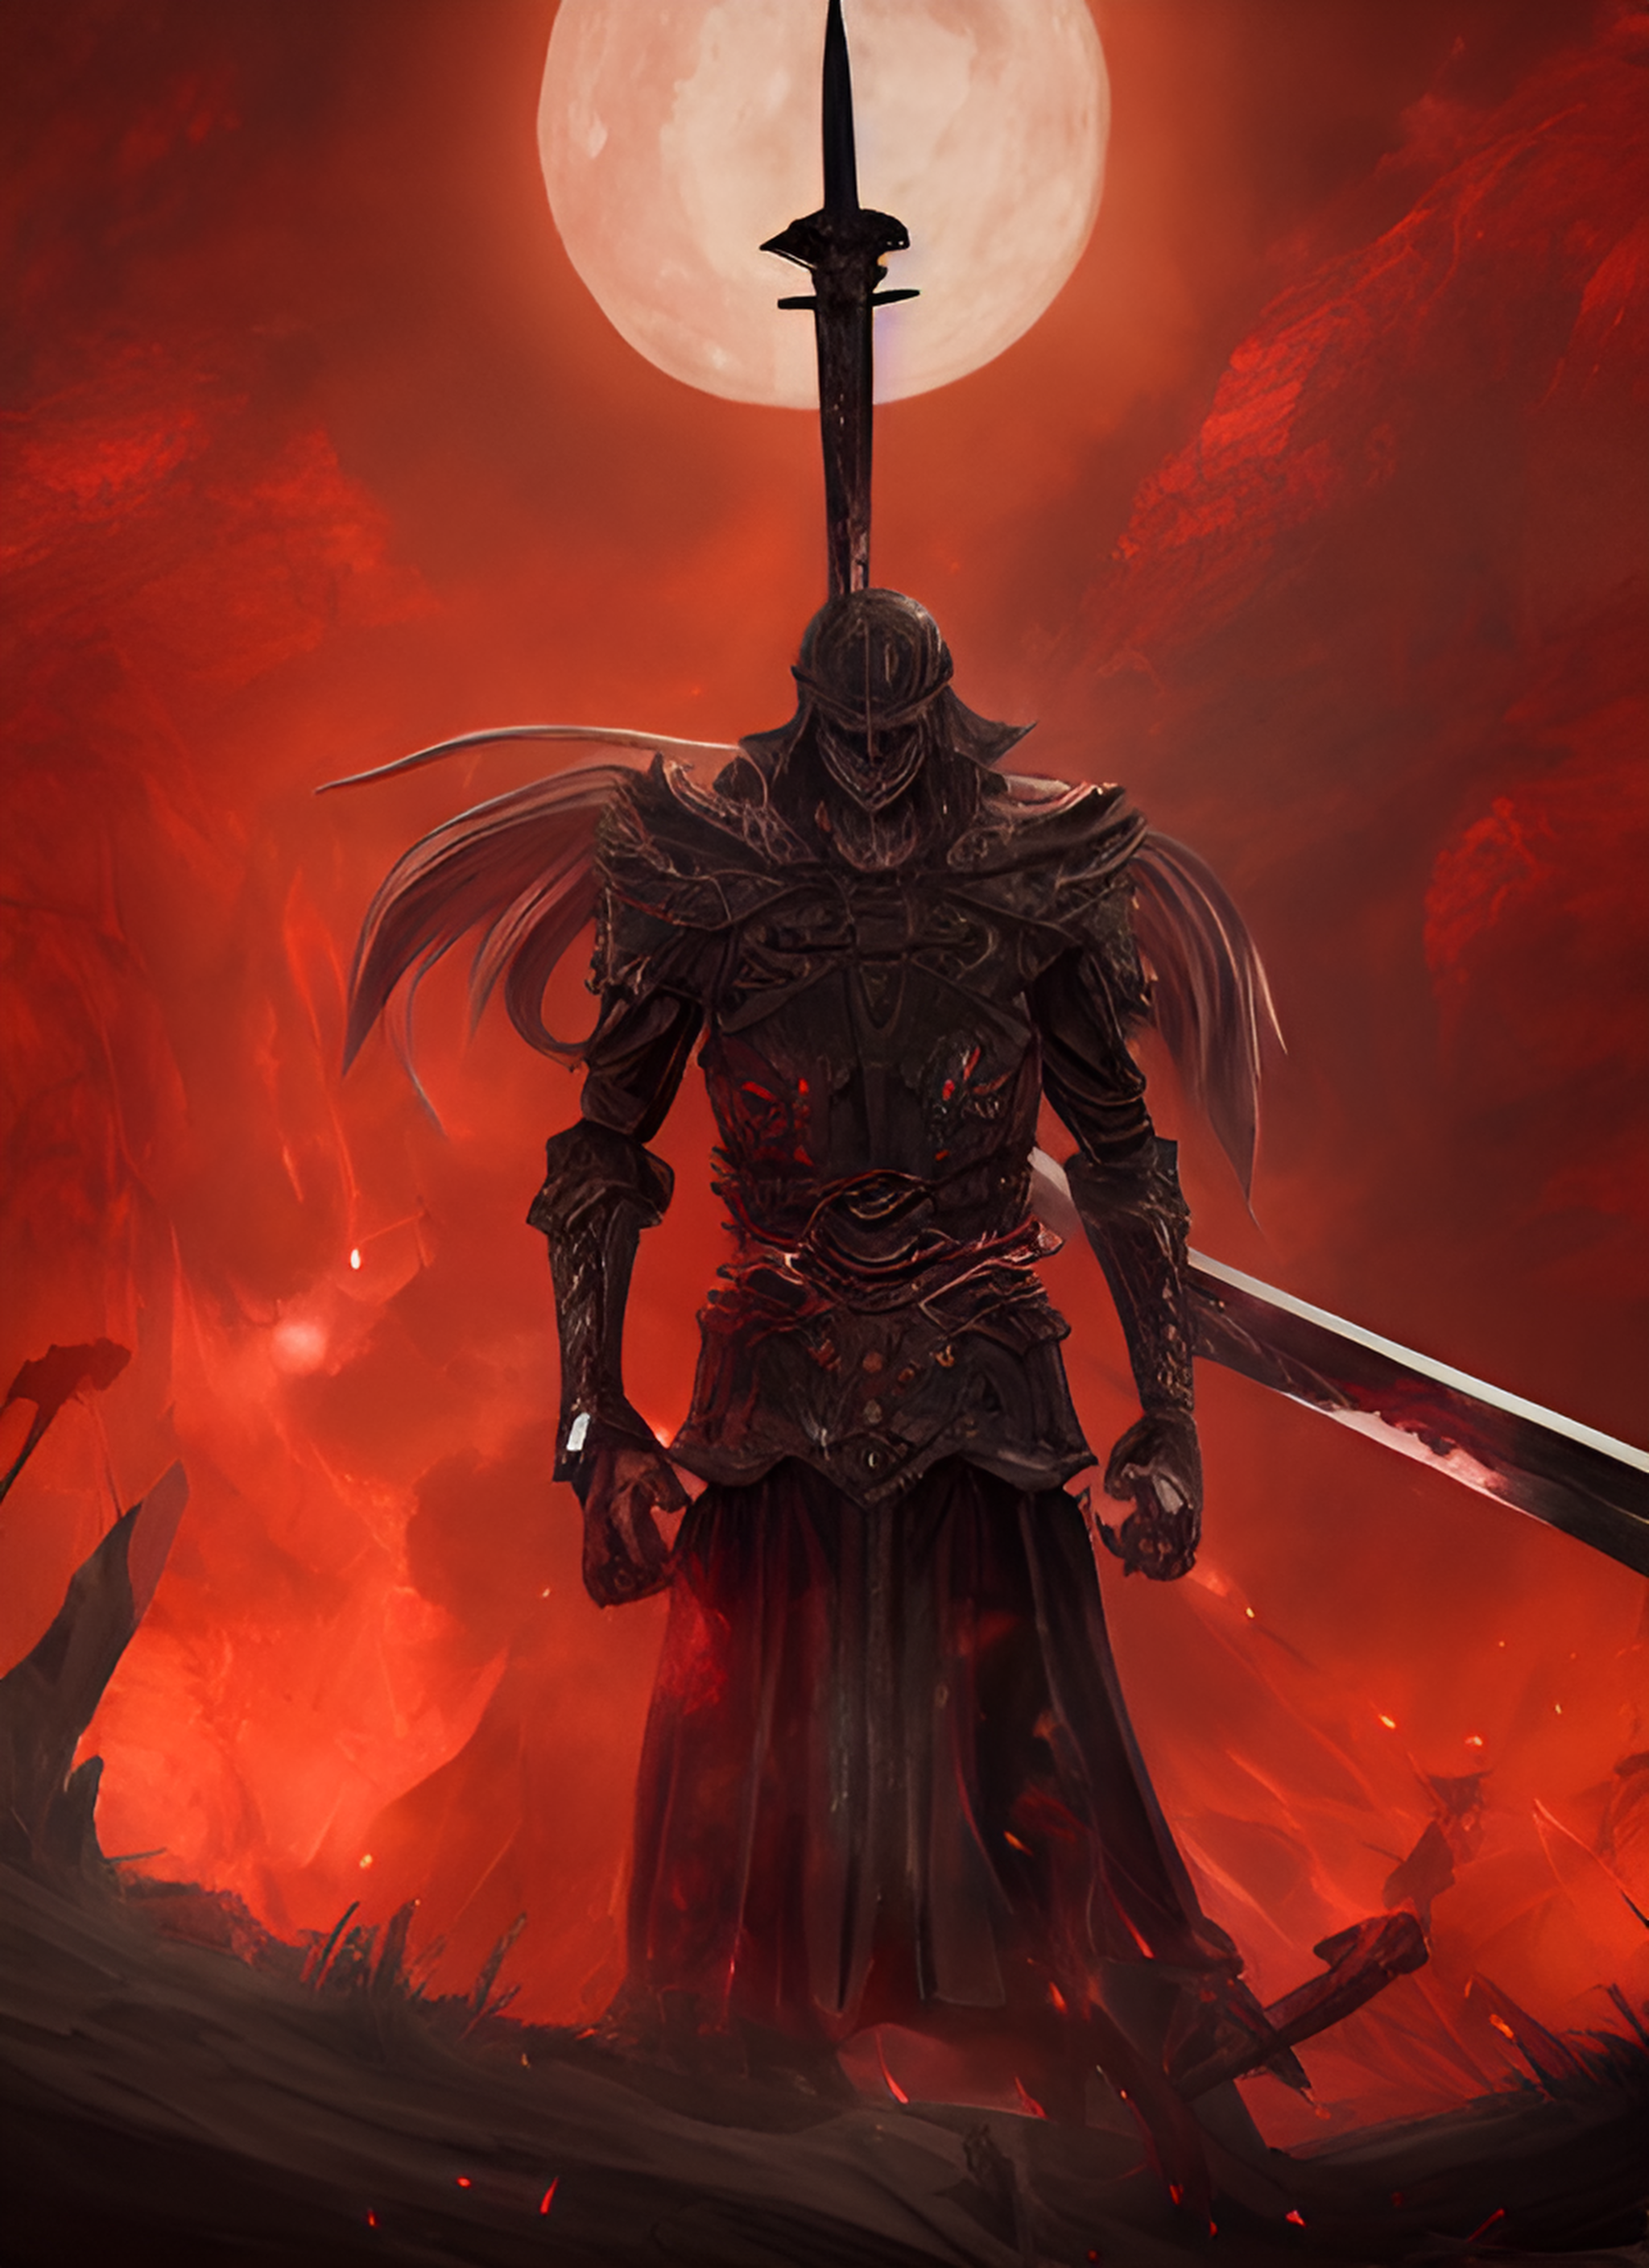 Blood Knight